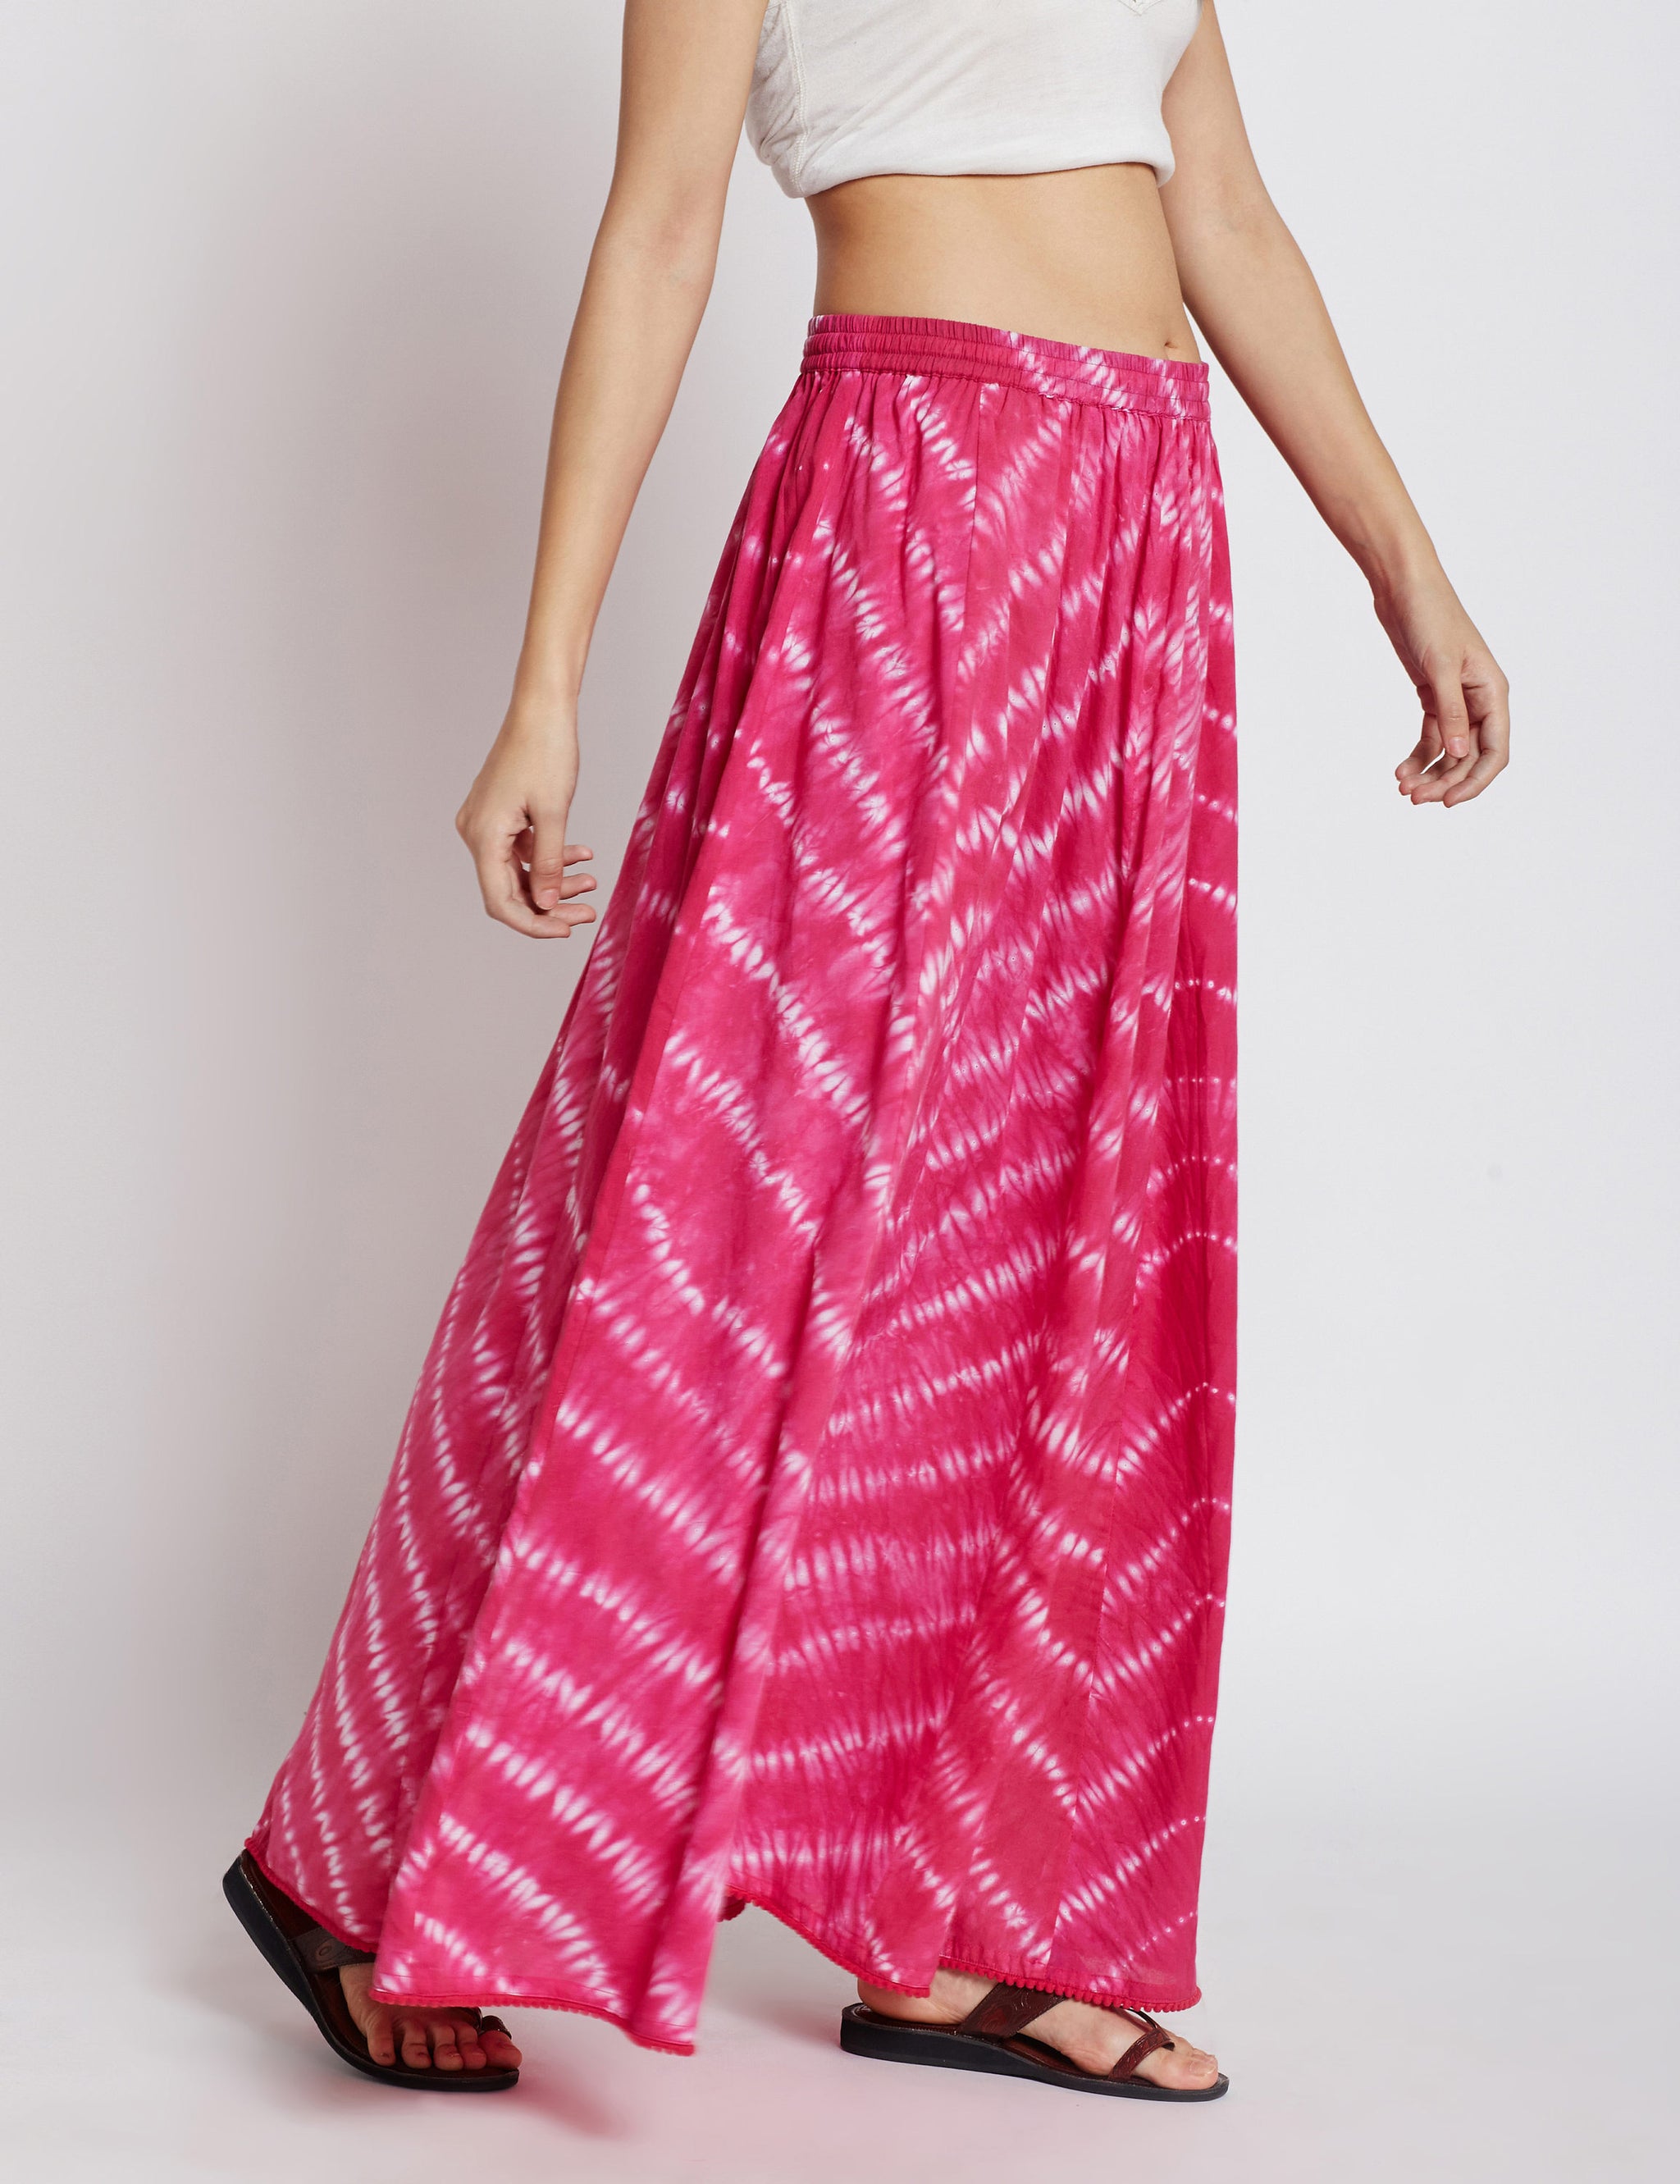 Shibori panelled long skirt in hotpink colour